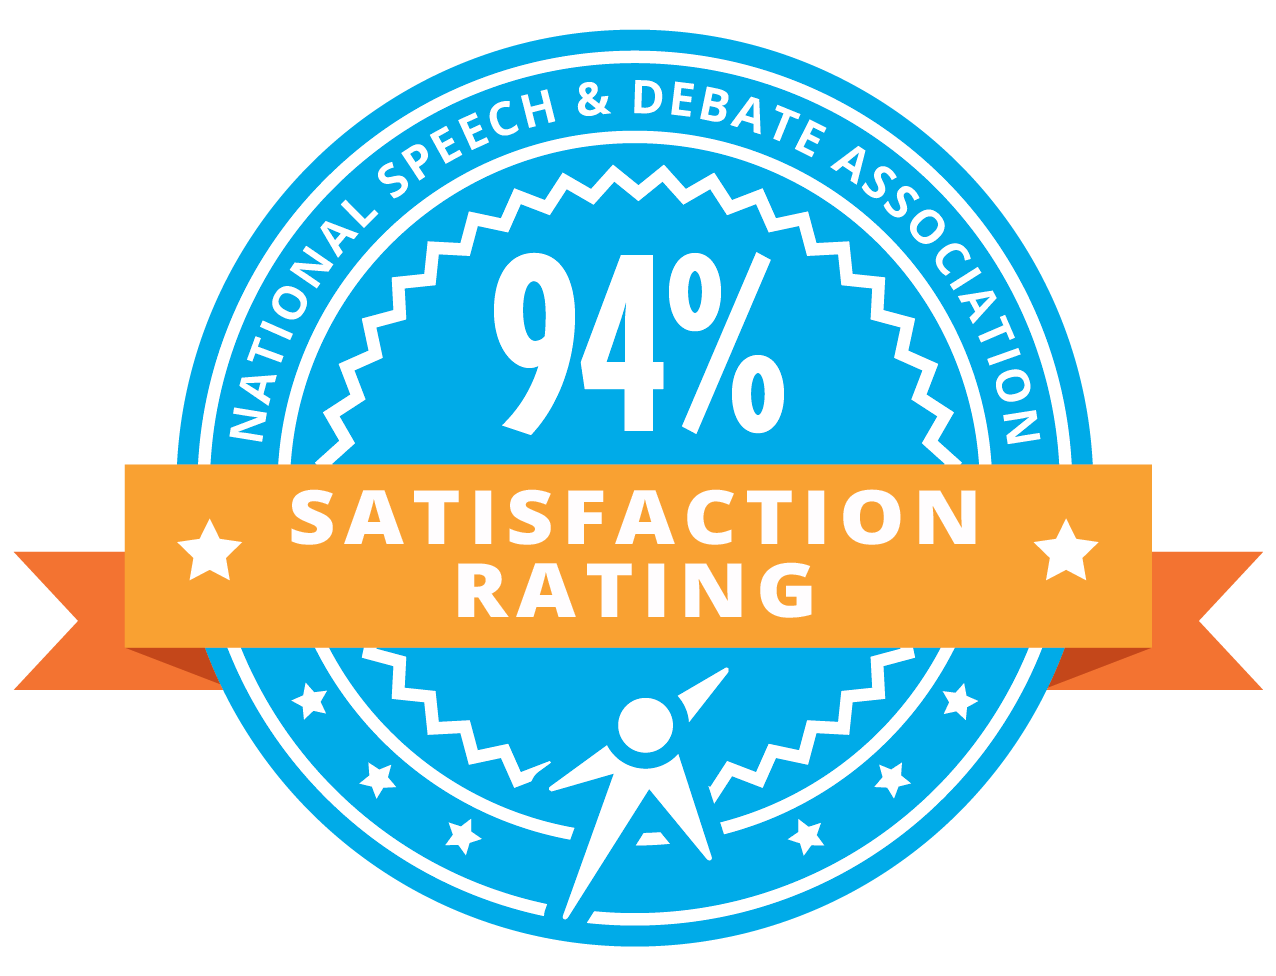 94% Satisfaction Rating